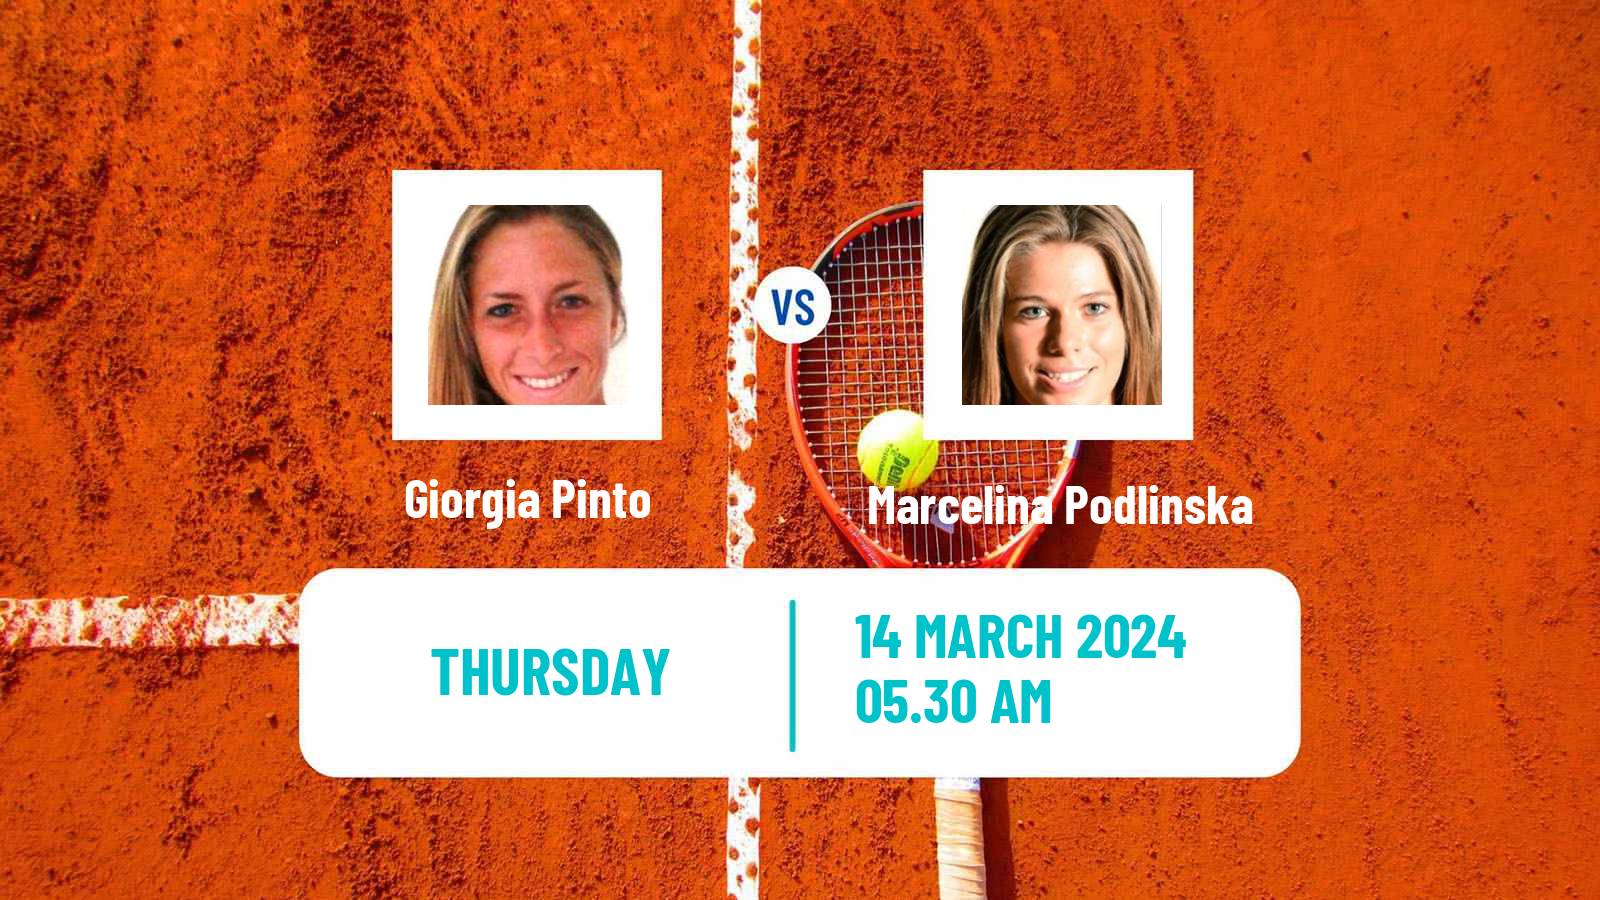 Tennis ITF W15 Heraklion 2 Women Giorgia Pinto - Marcelina Podlinska